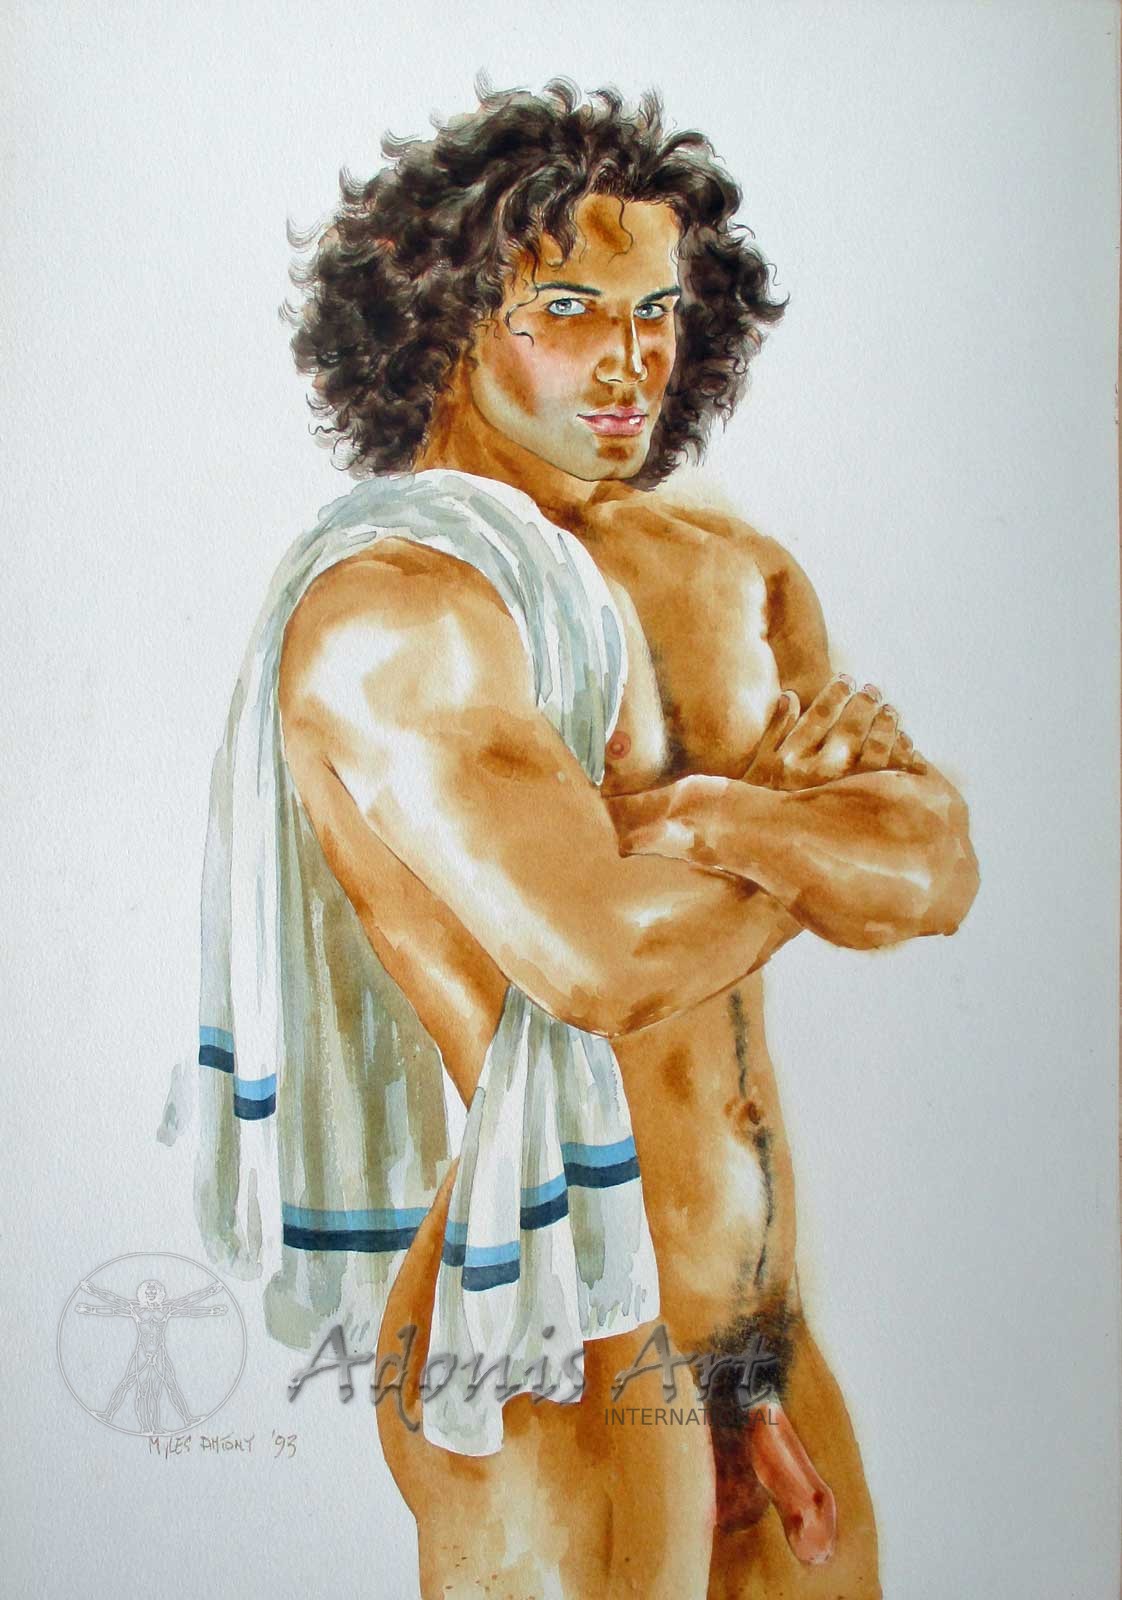 'Greek Lifeguard' watercolour by Myles Antony